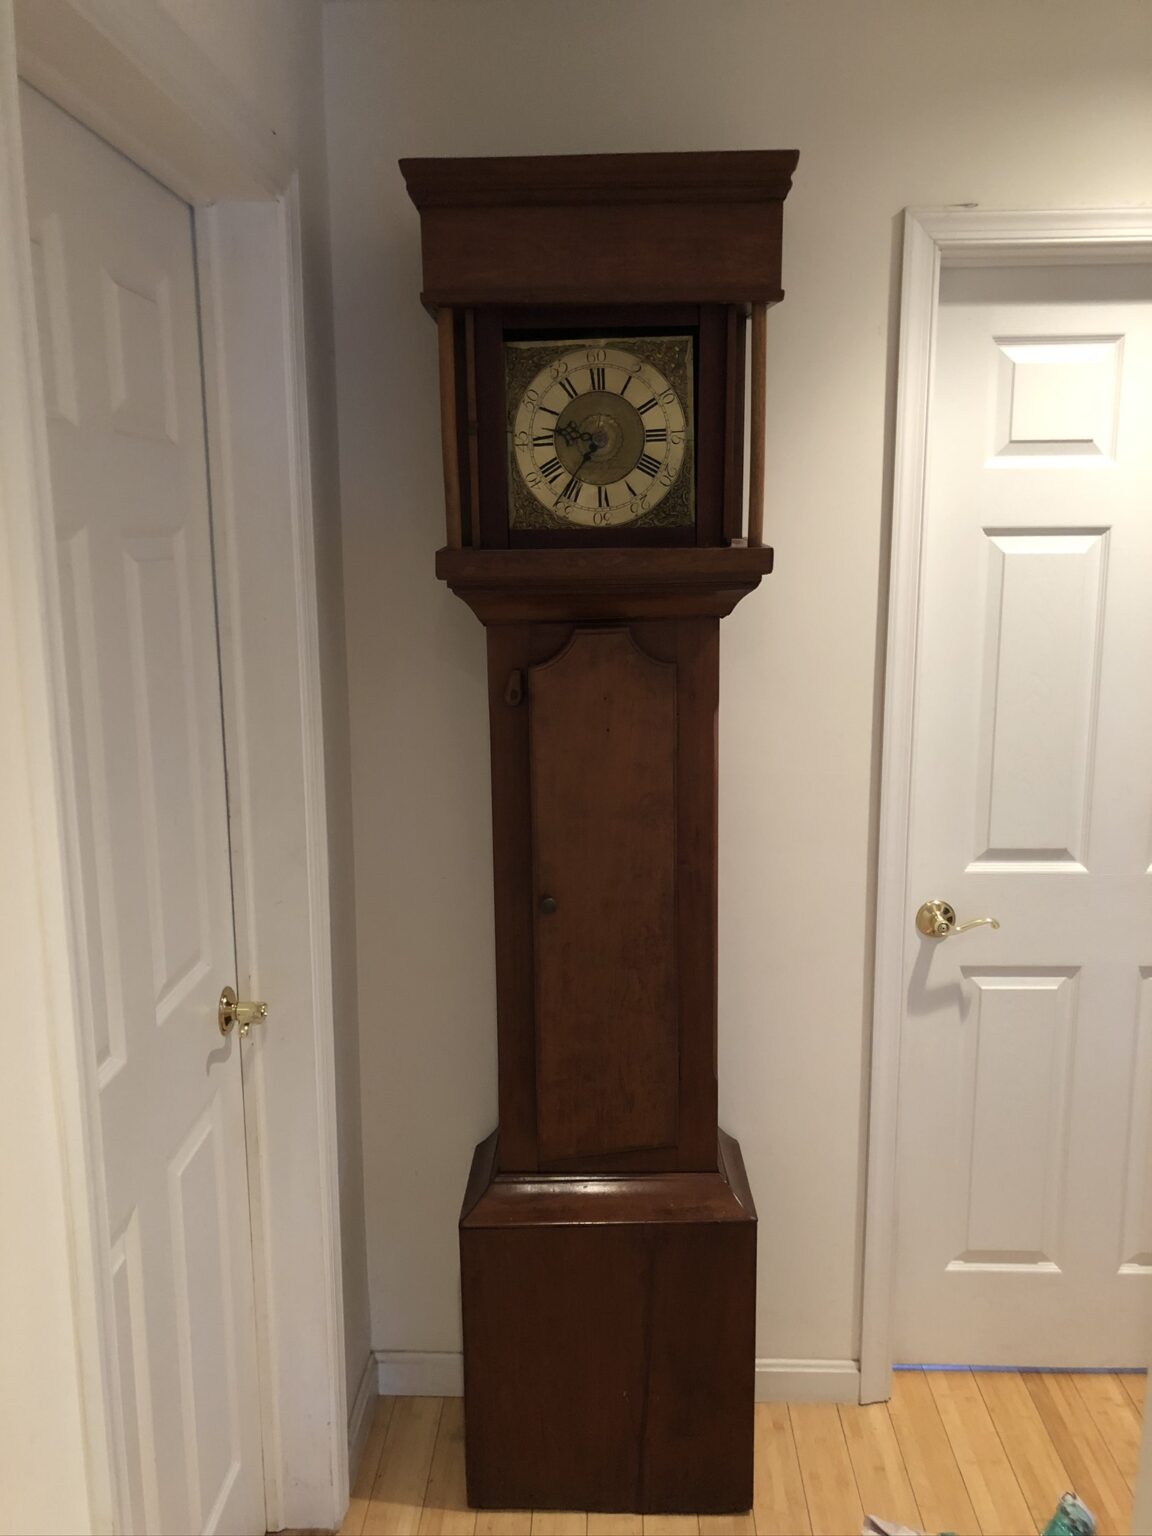 grandfather clock repair near me